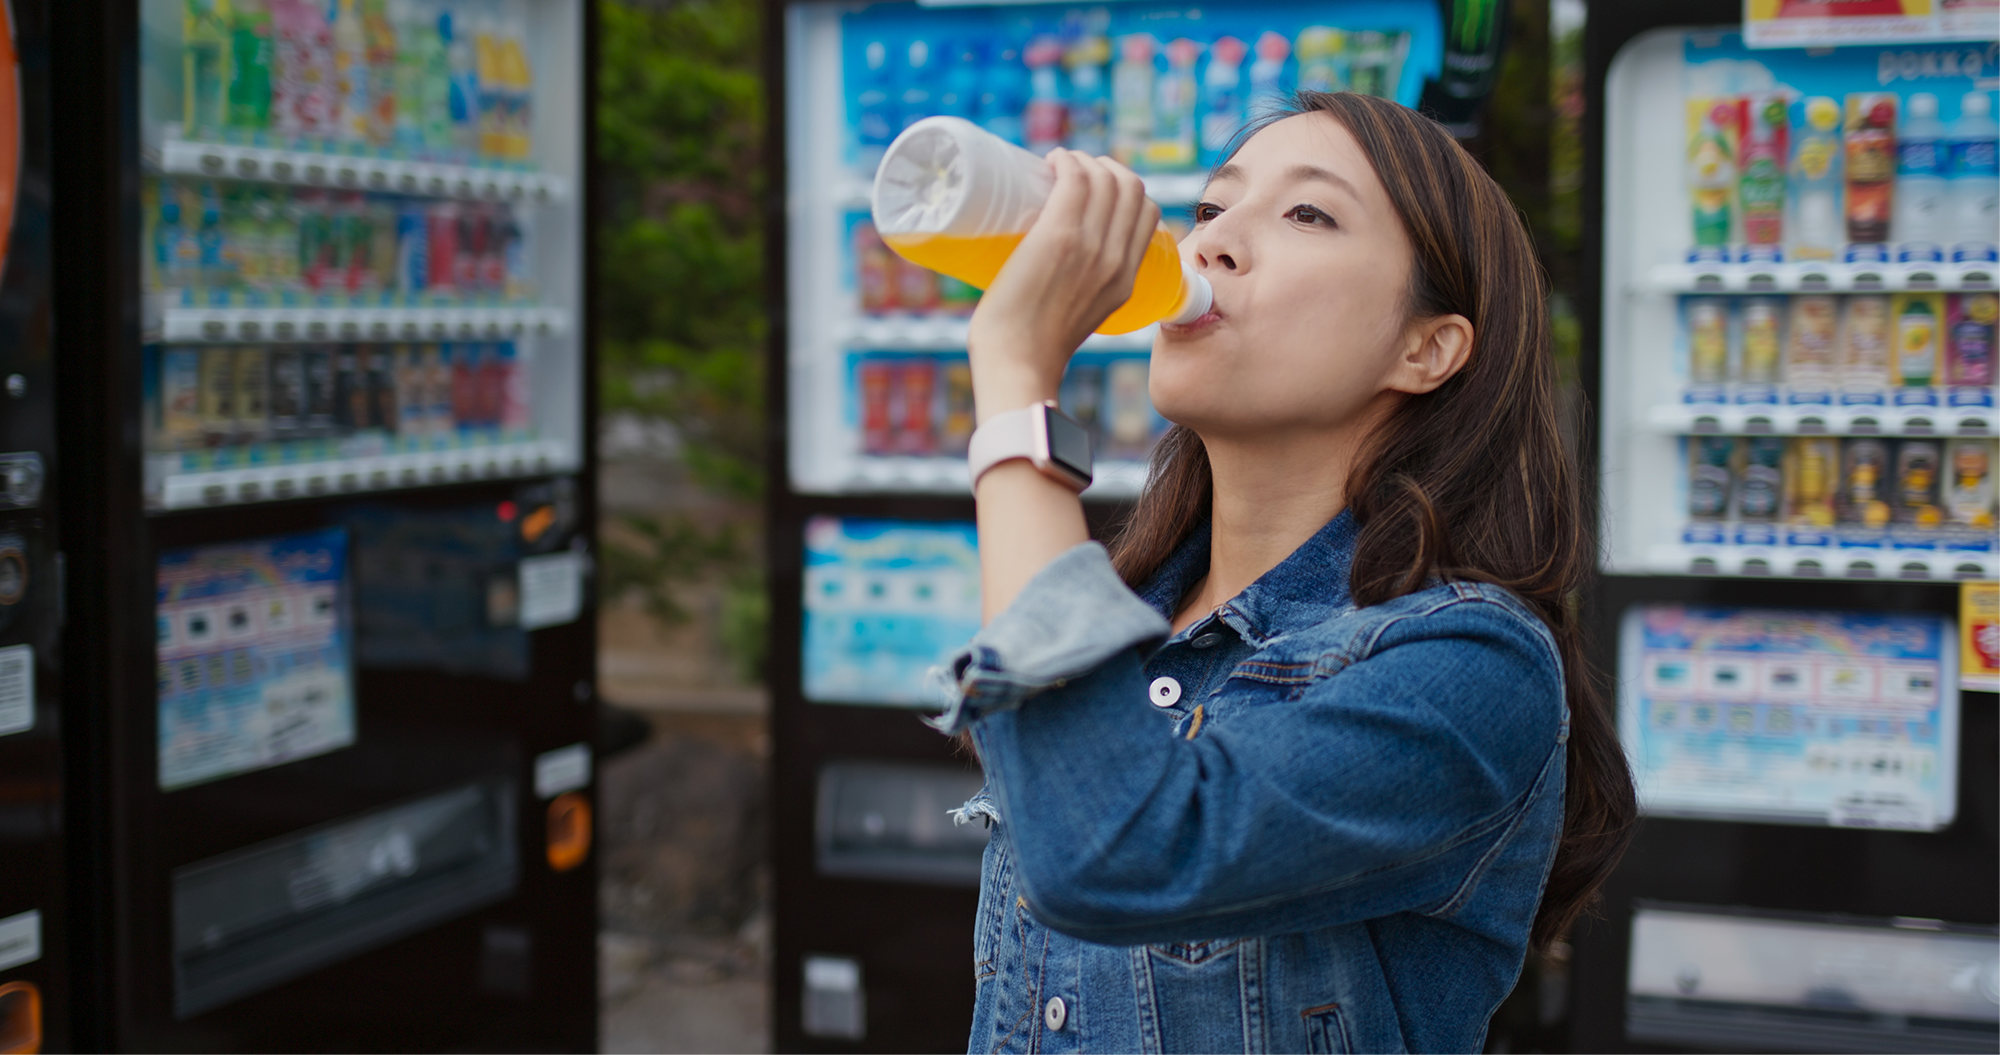 Beverage vending machines in Washington DC and DMV area